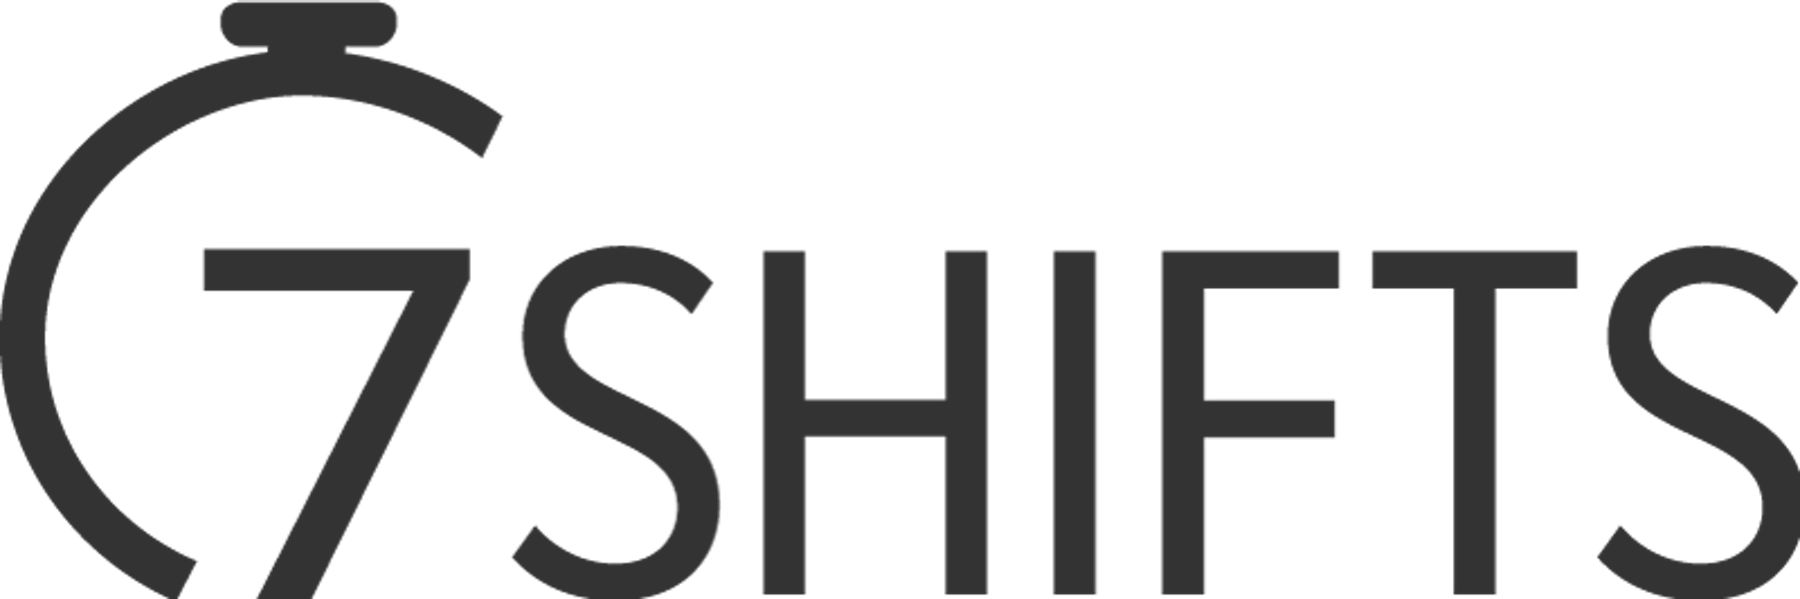 7 shifts logo black png